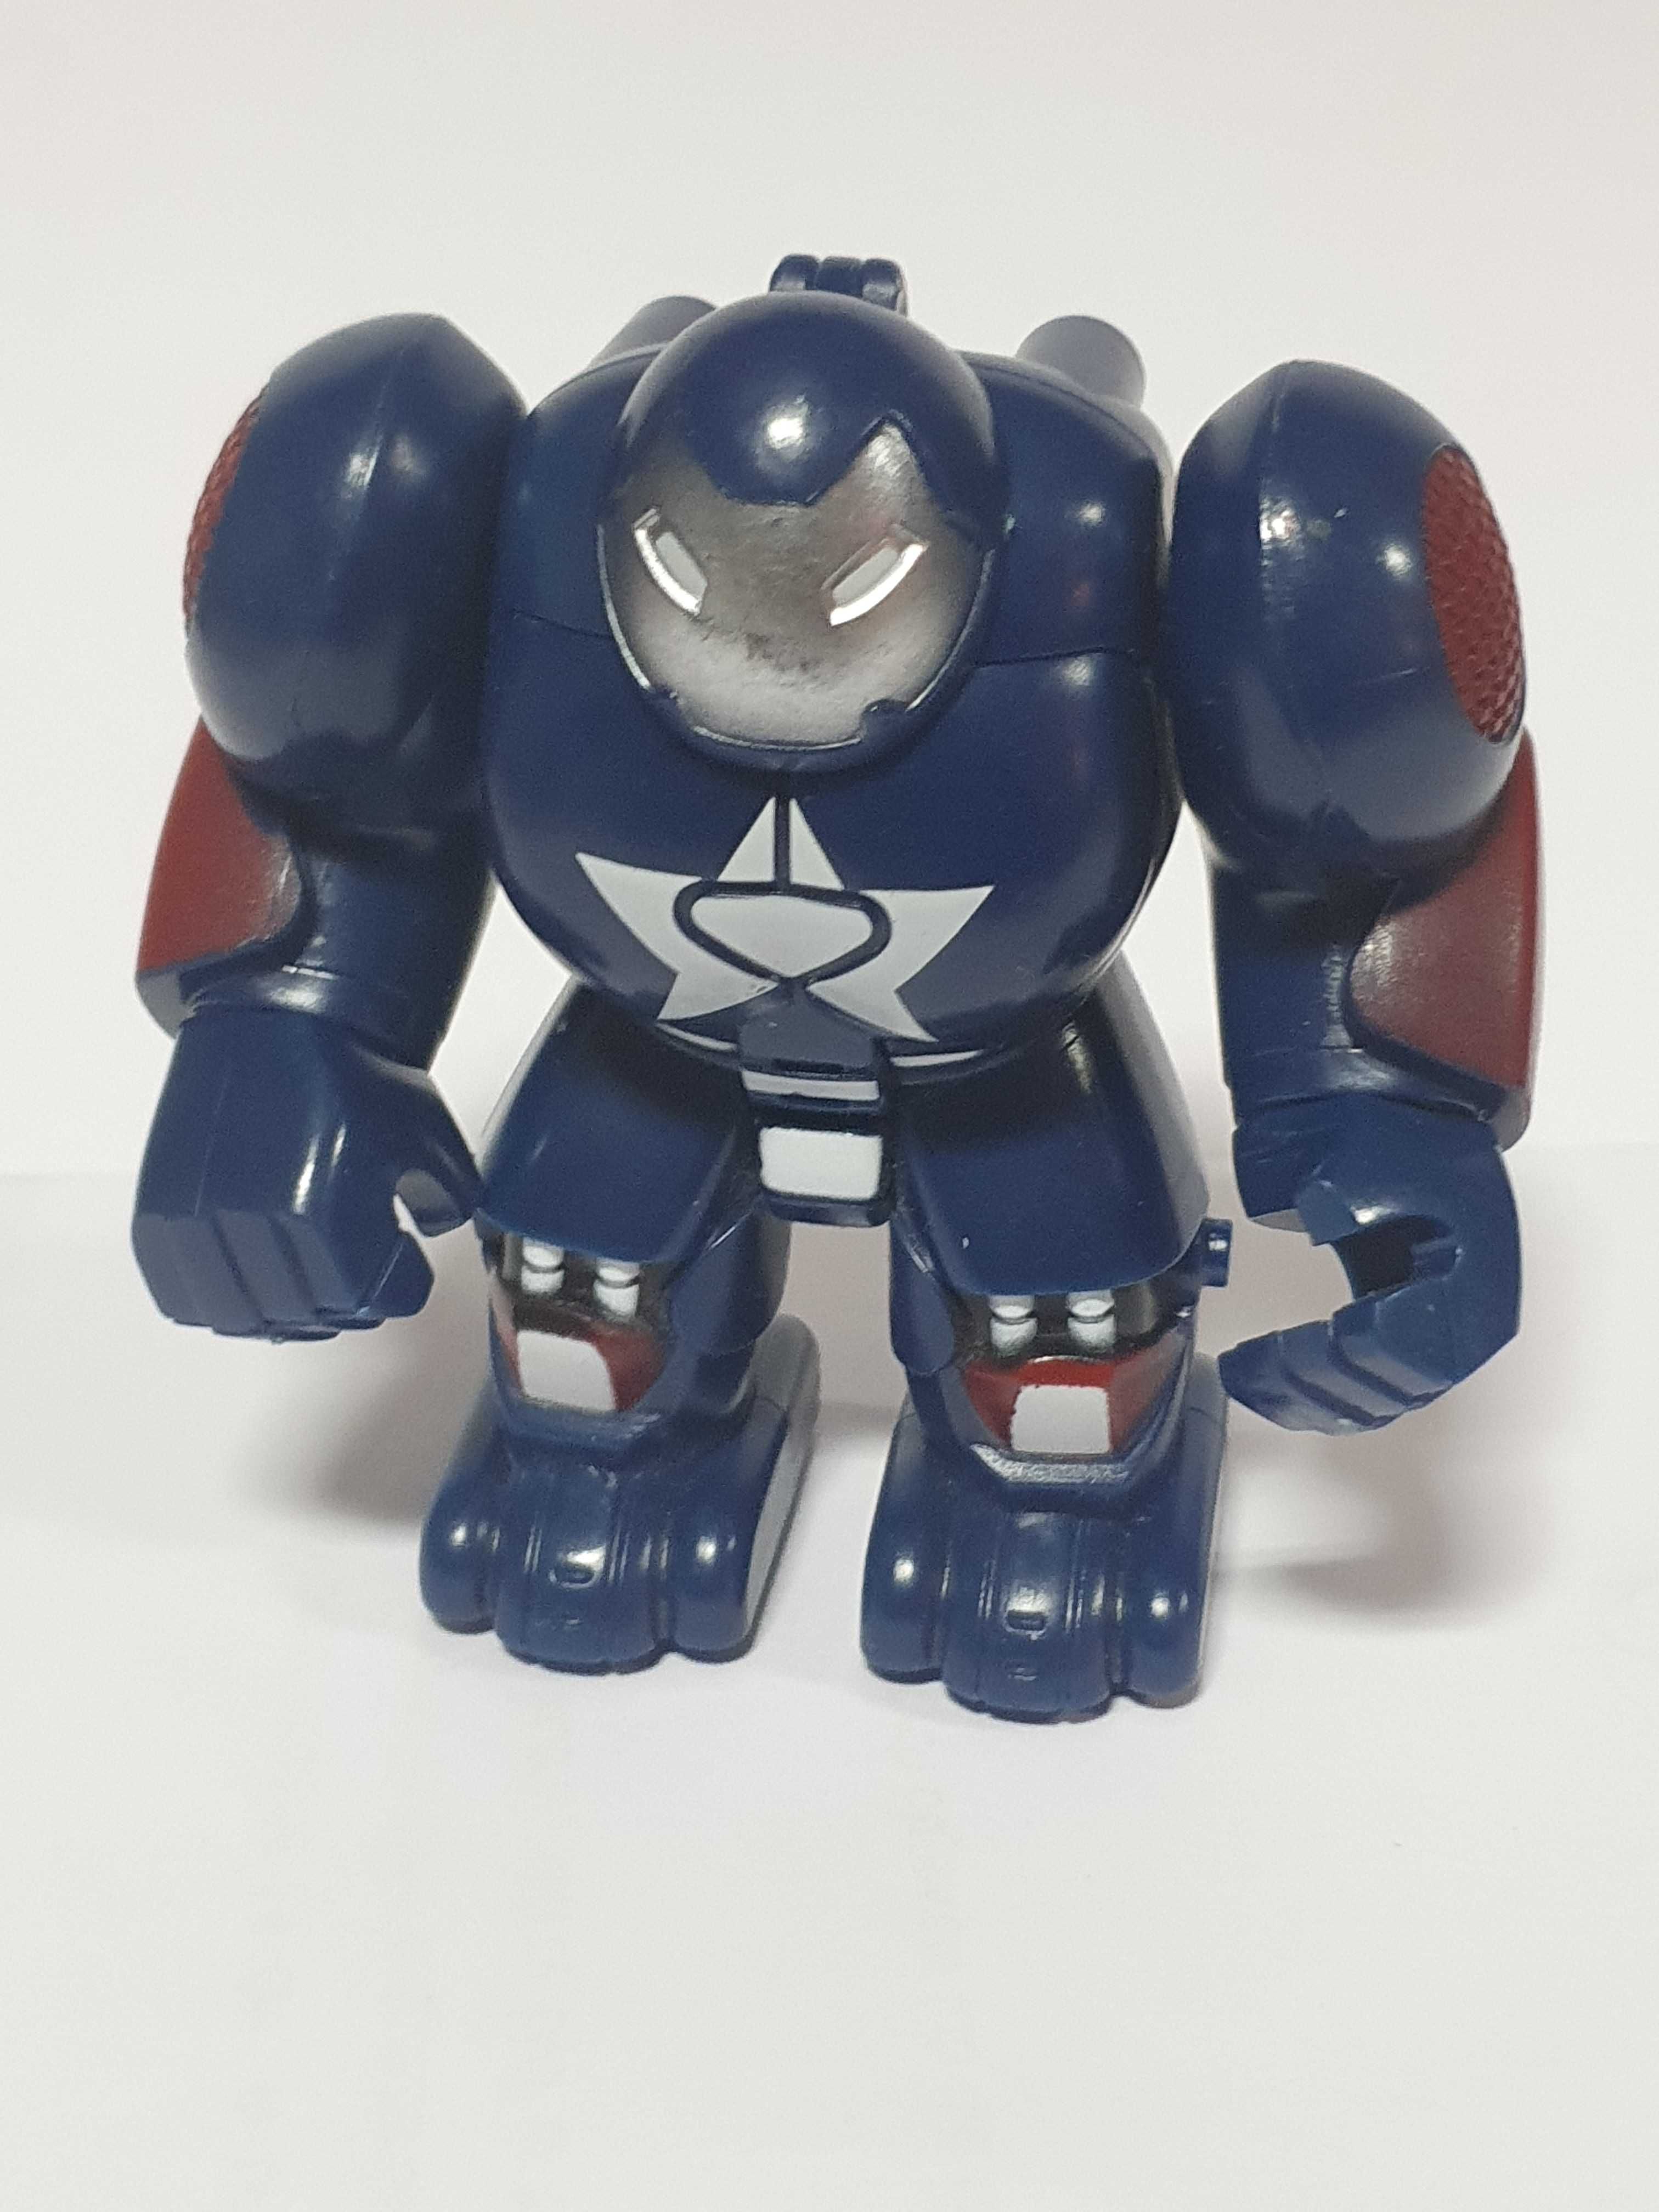 Duza figurka robot Kapitan Ameryka/ Ironman Hulkbuster W typie Lego